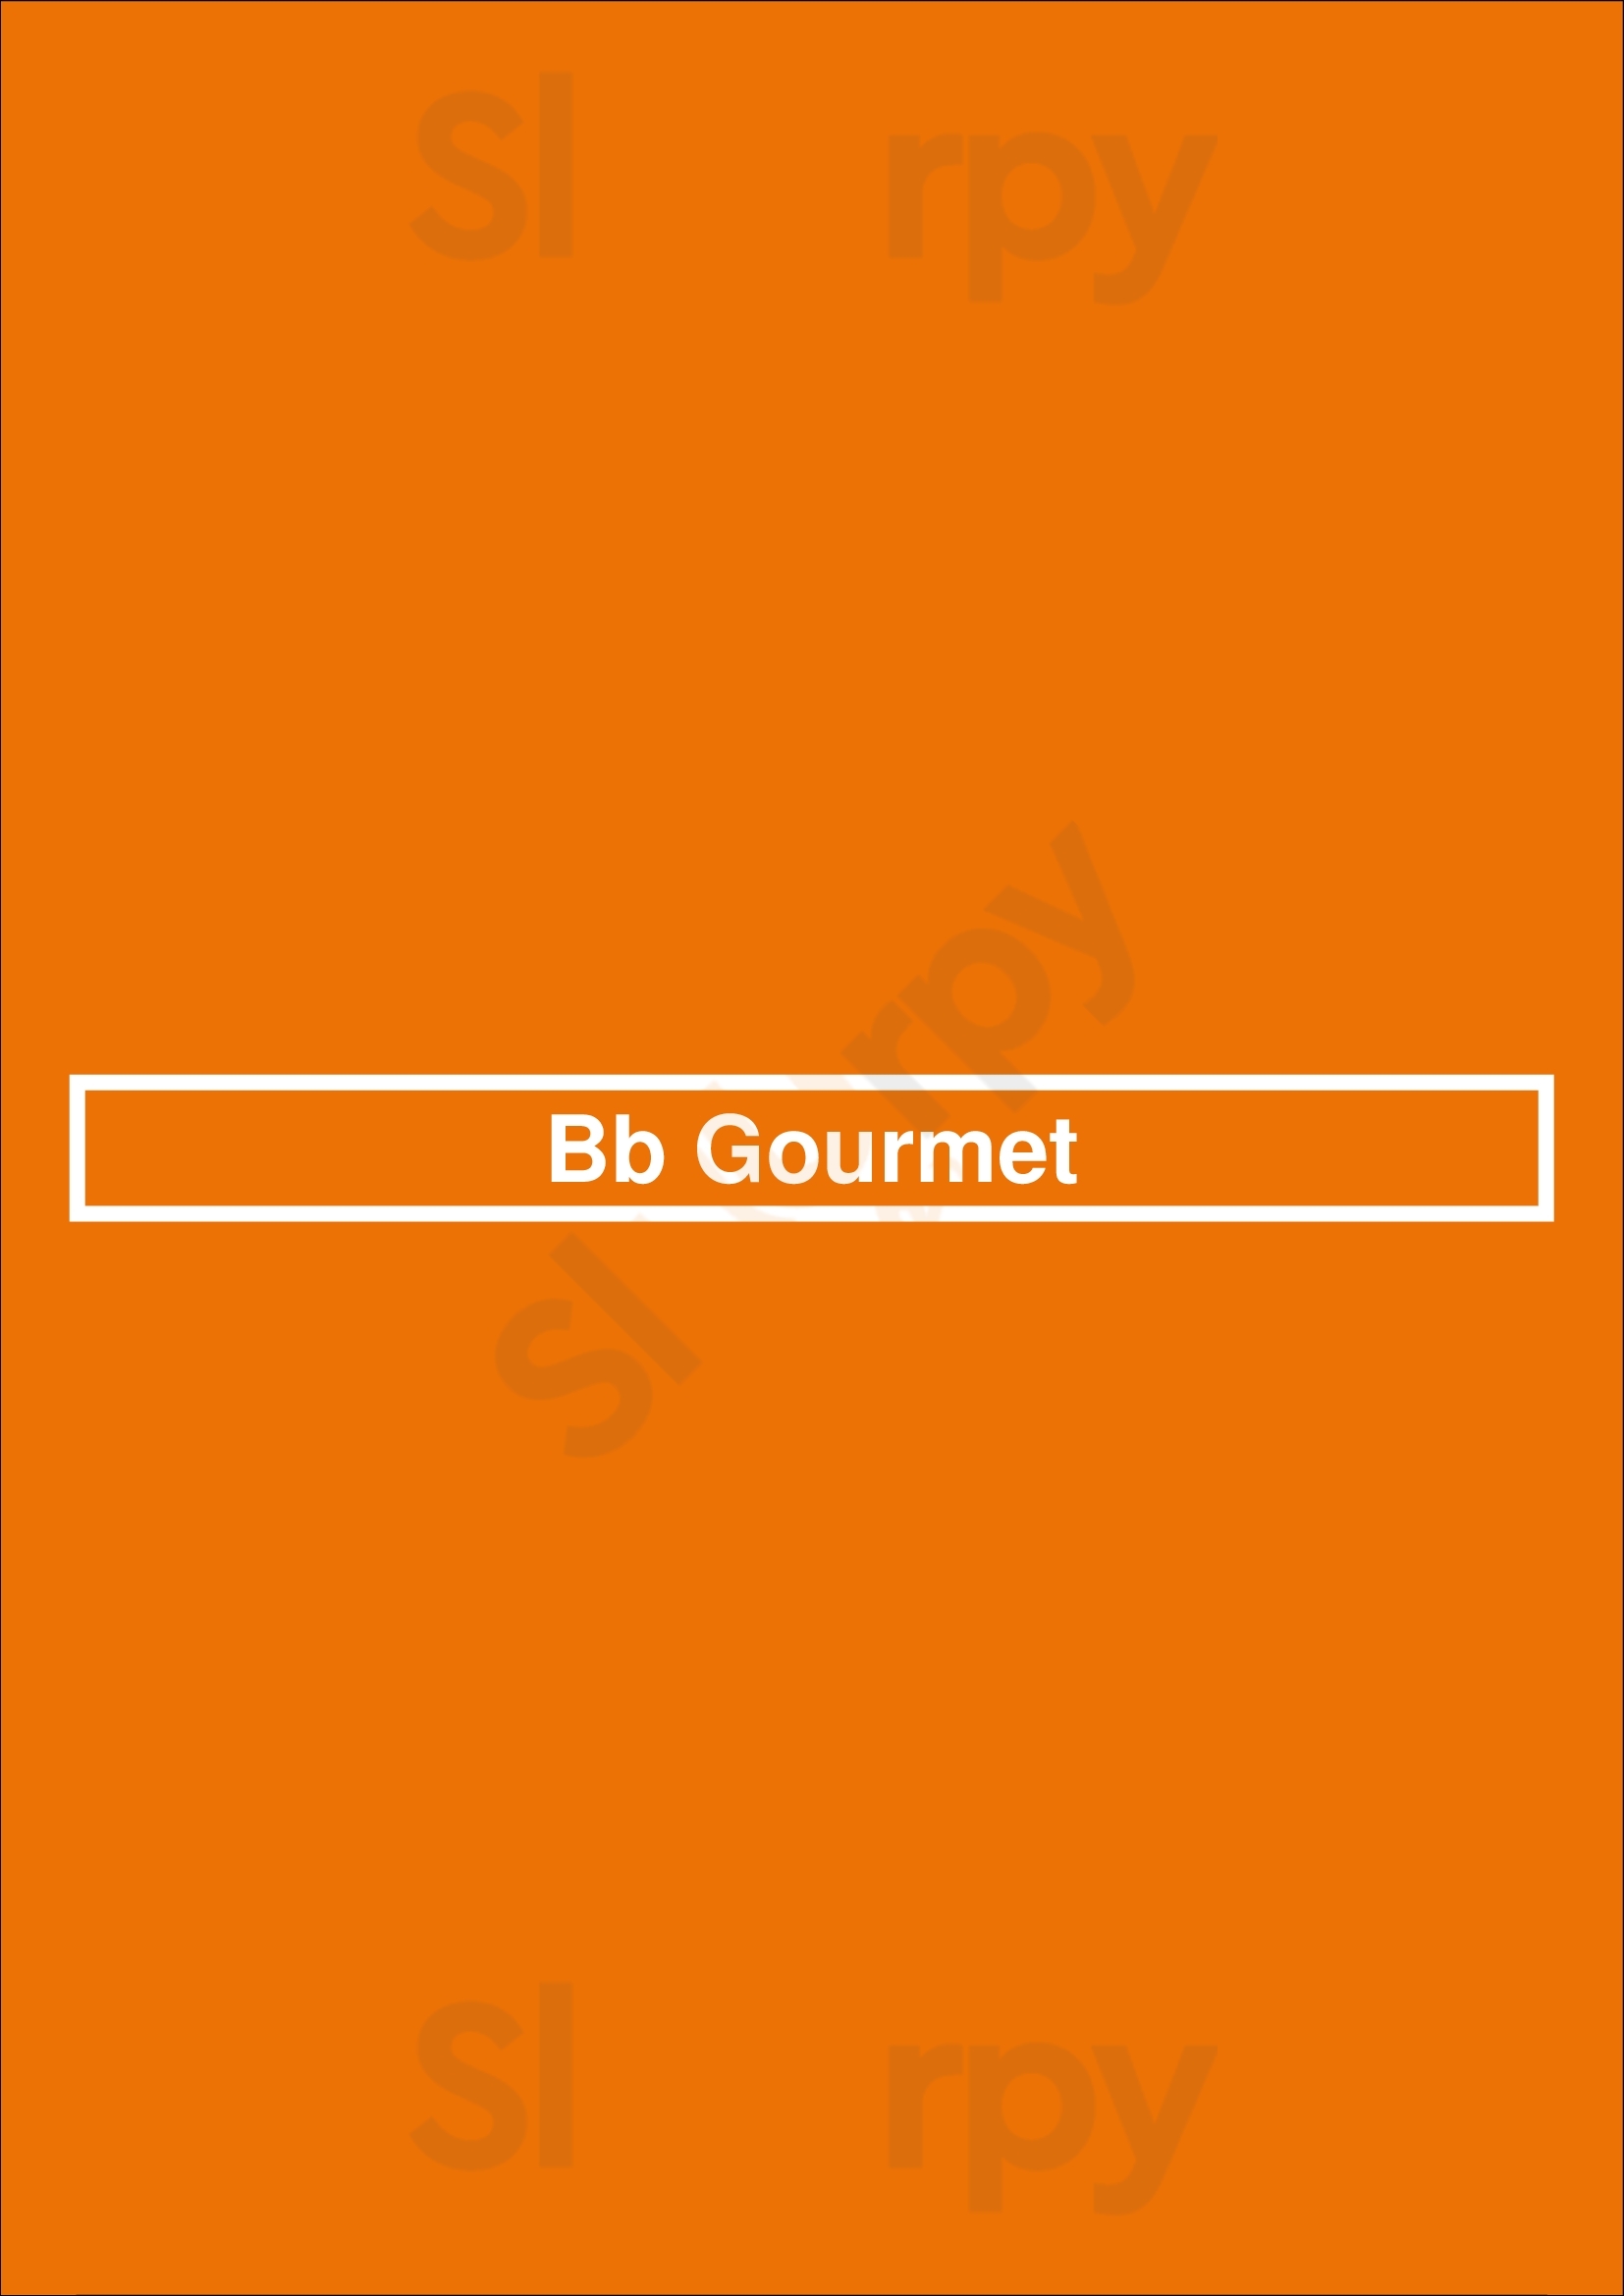 Bb Gourmet Porto Menu - 1